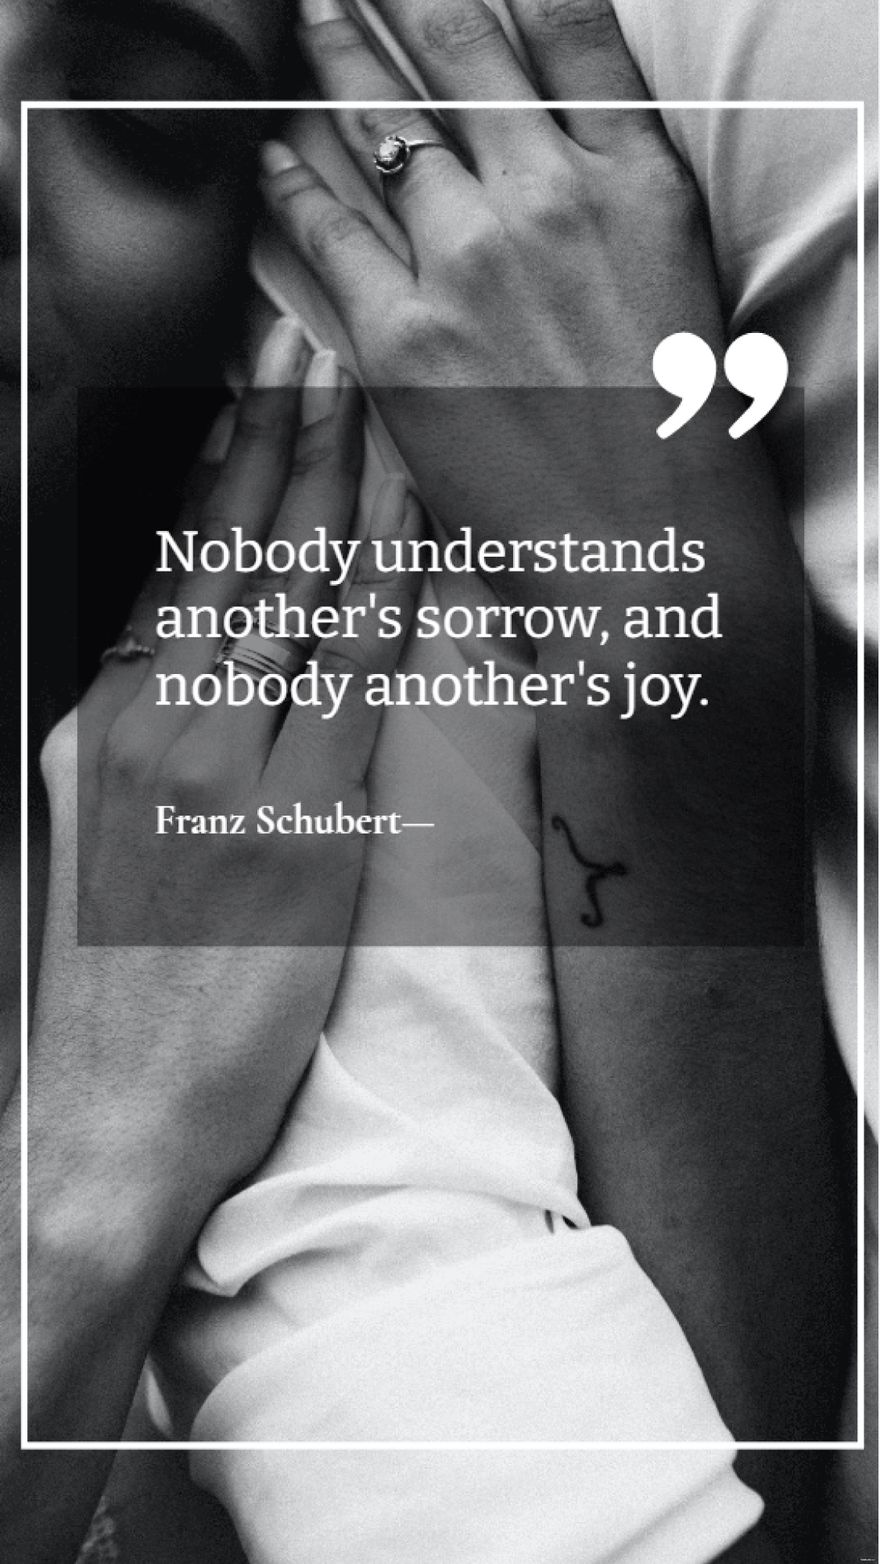  Franz Schubert - Nobody understands another's sorrow, and nobody another's joy.